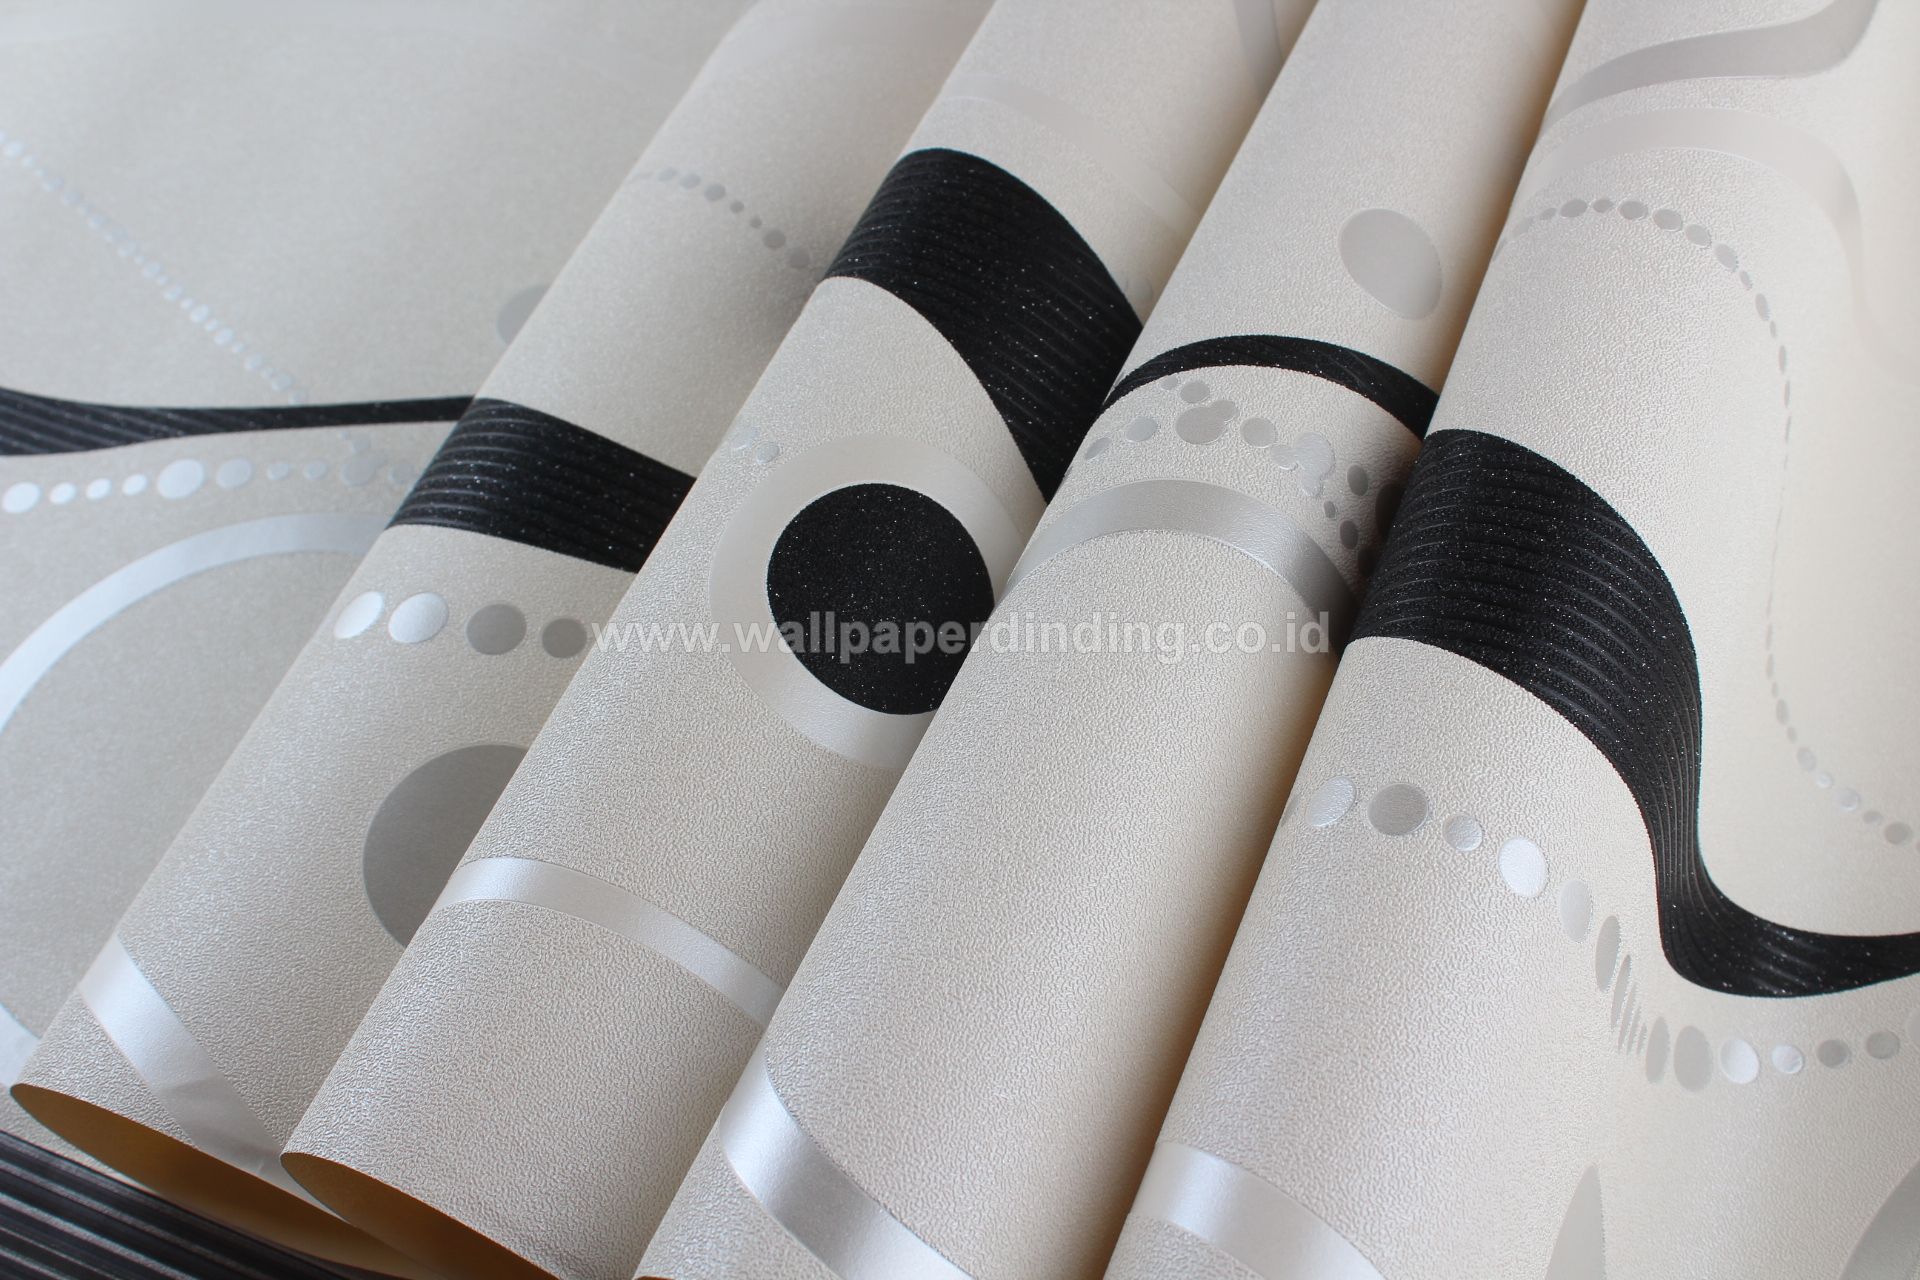 Wallpaper Dinding Garis Minimalis Putih Hitam Silver - Dinding Motif Hitam Putih - HD Wallpaper 